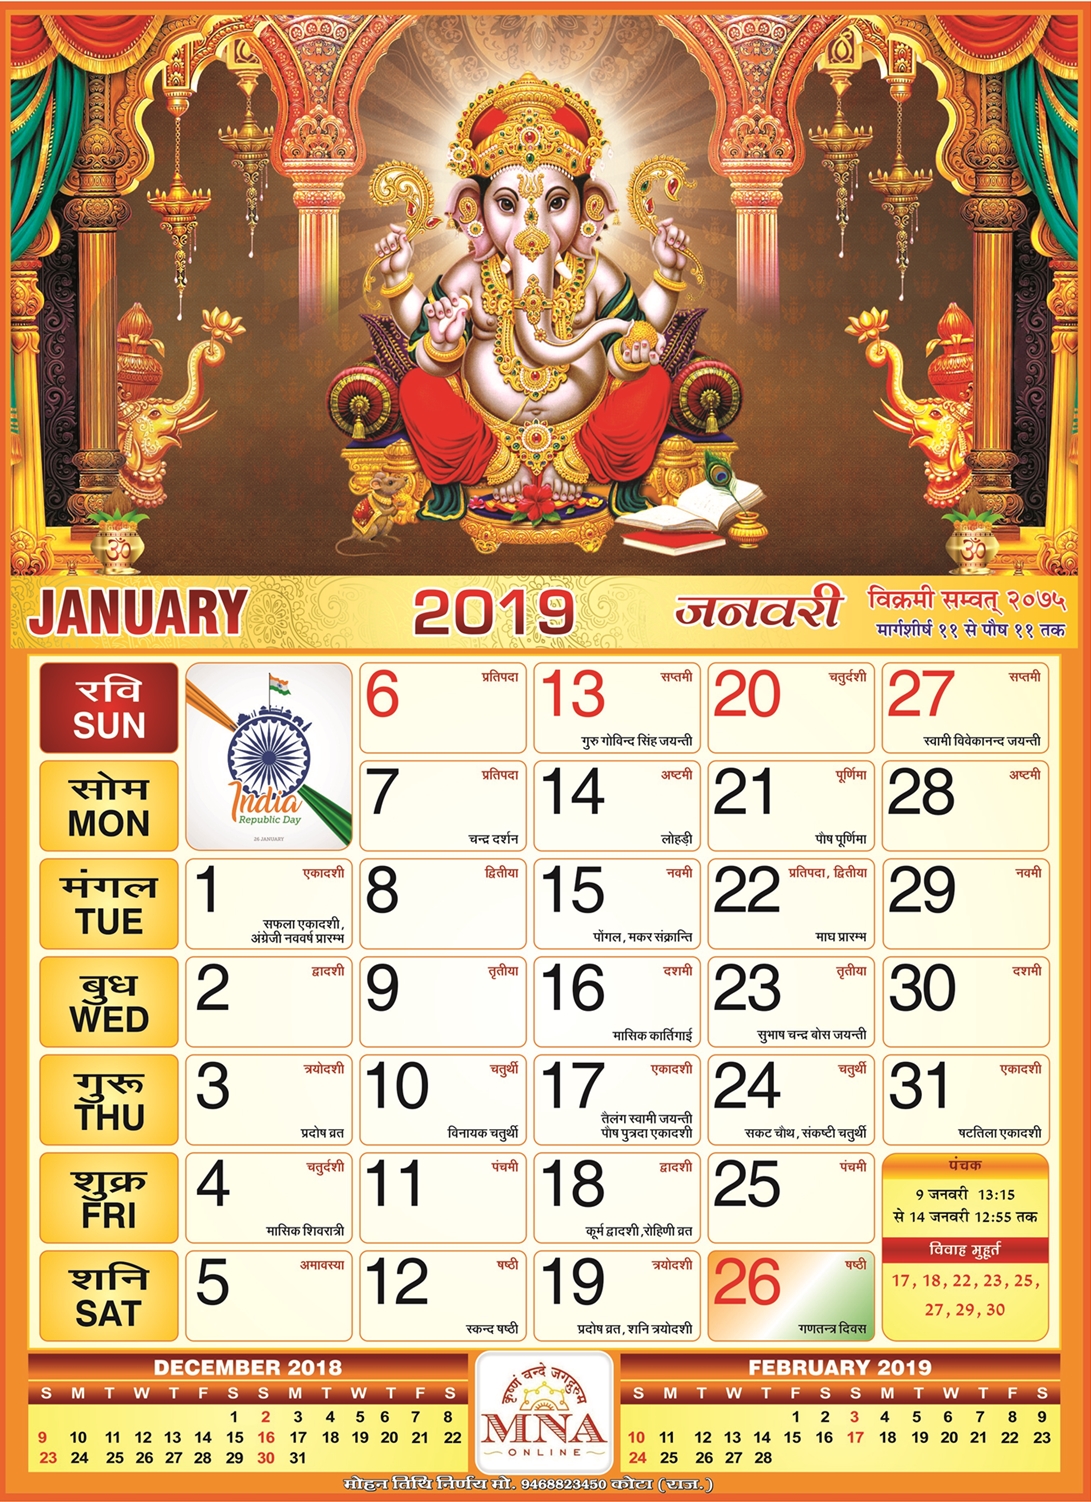 buy-mohan-tithi-nirnay-2019-hindu-calendar-2019-2-pcs-online-160-from-shopclues